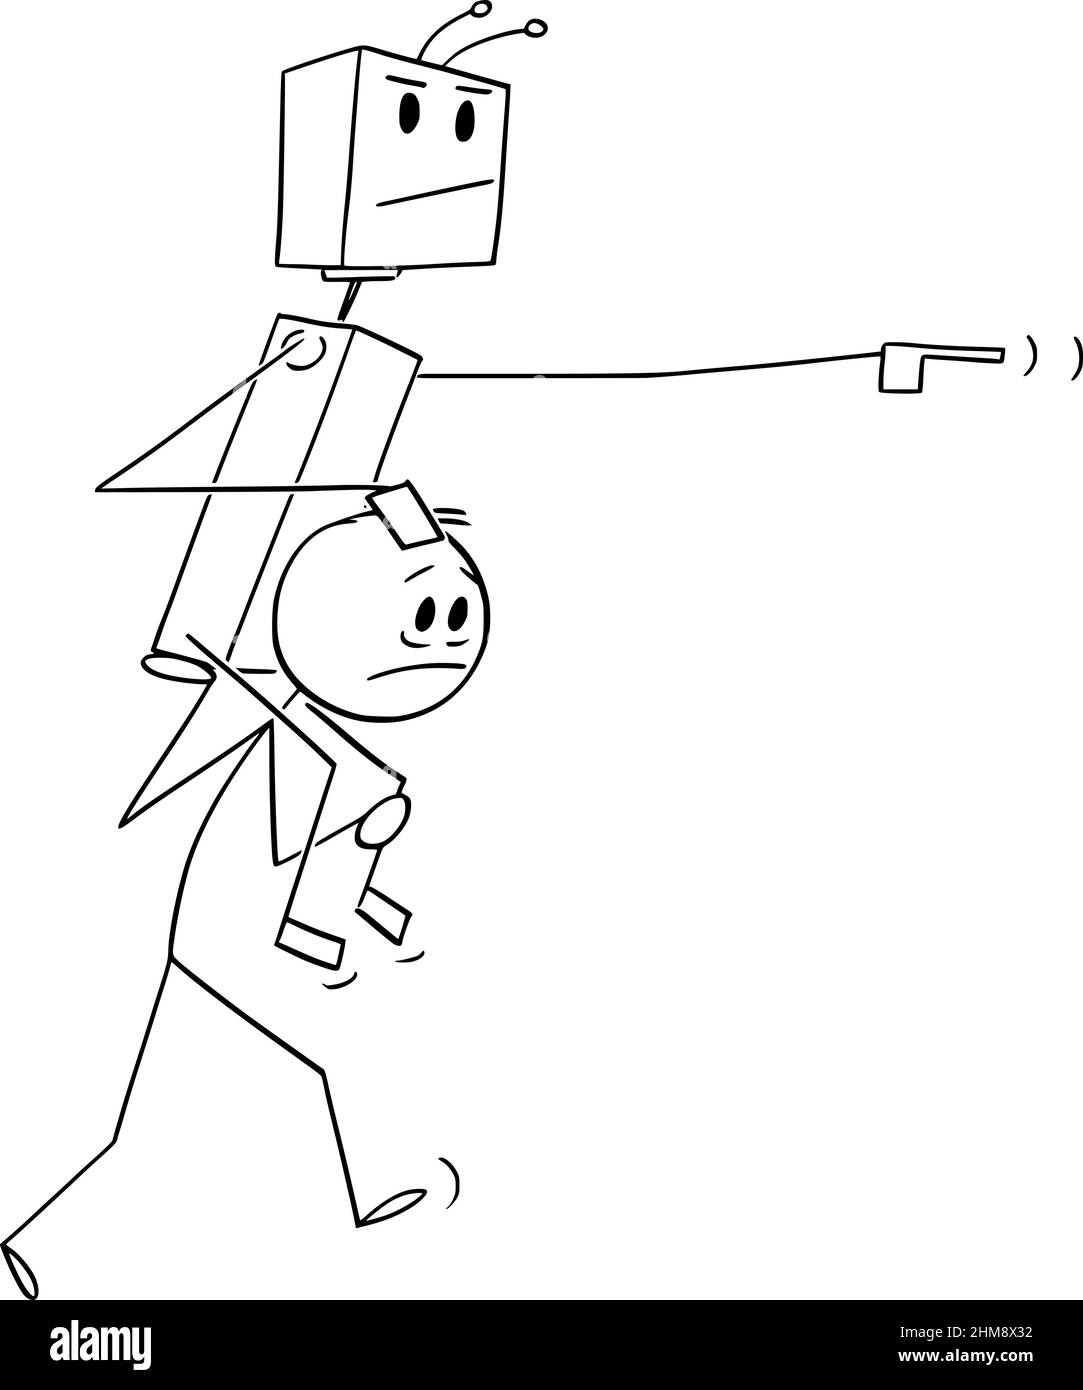 Human Carrying Robot on his Shoulders , Vector Cartoon Stick Figure Illustration Stock Vector